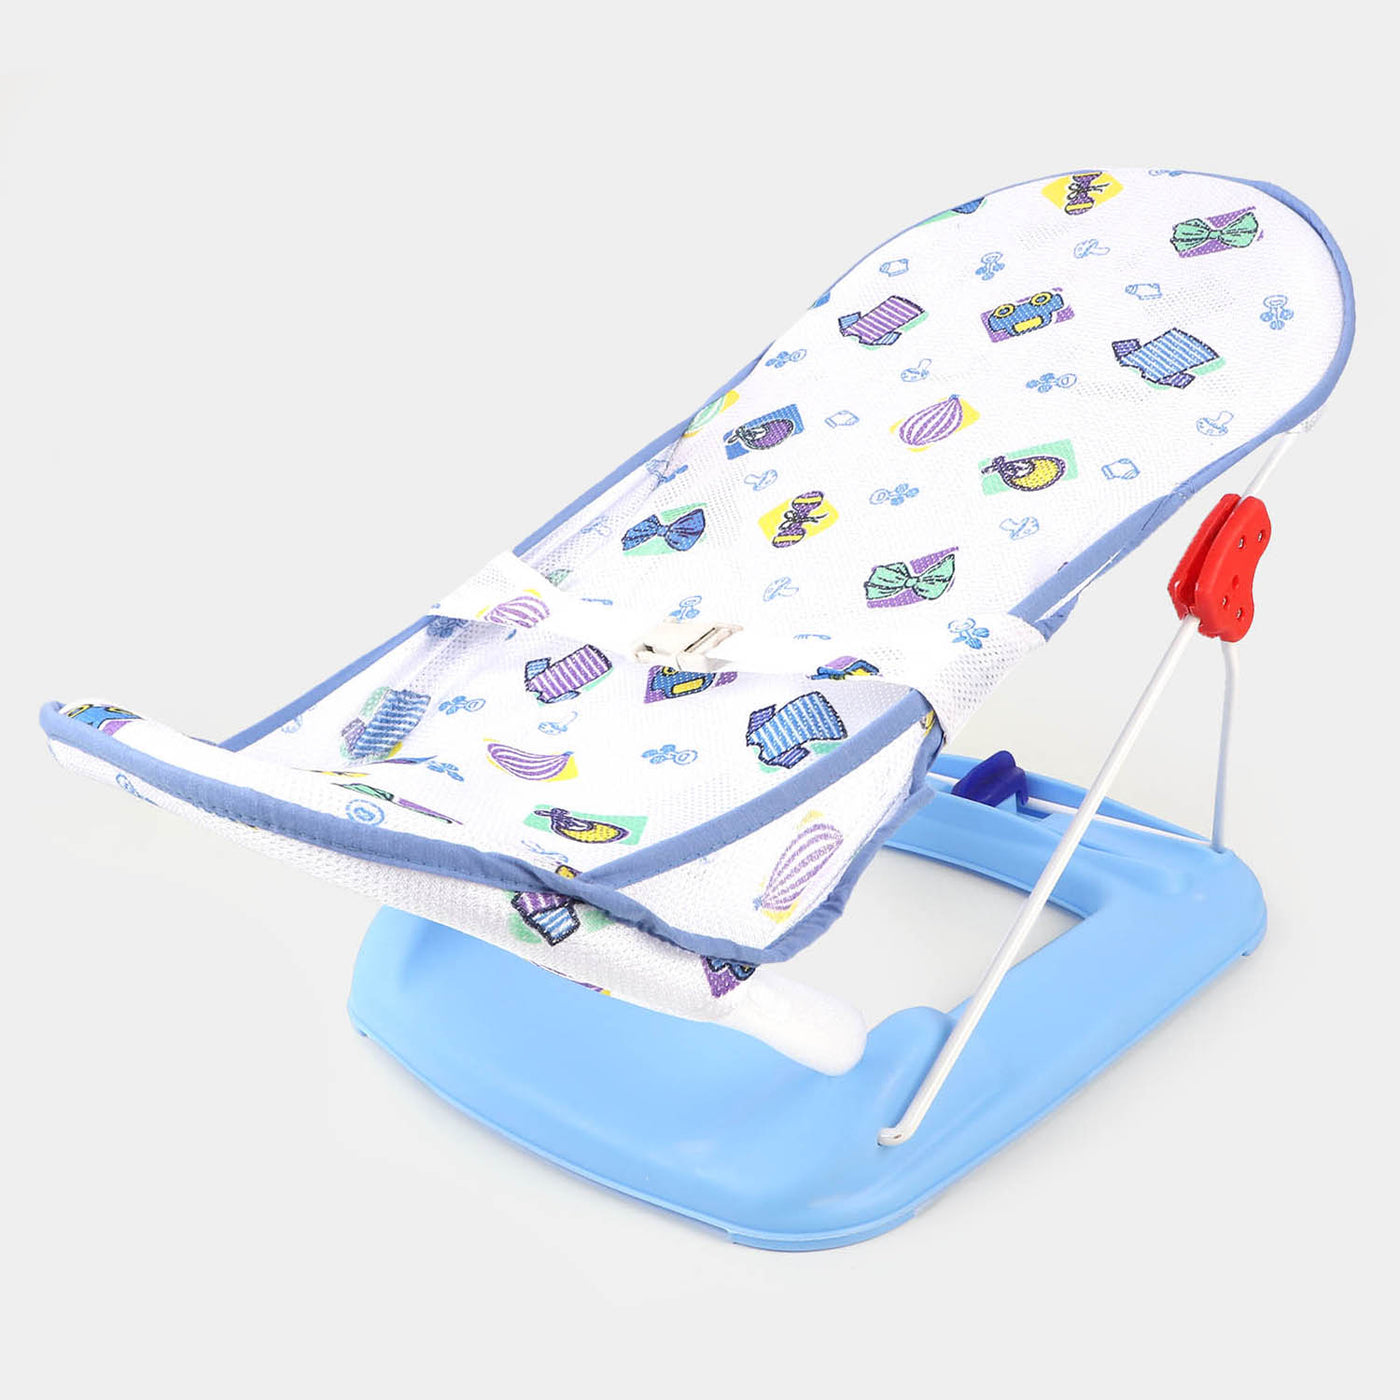 Baby Comfort Luxurious Baby Bather